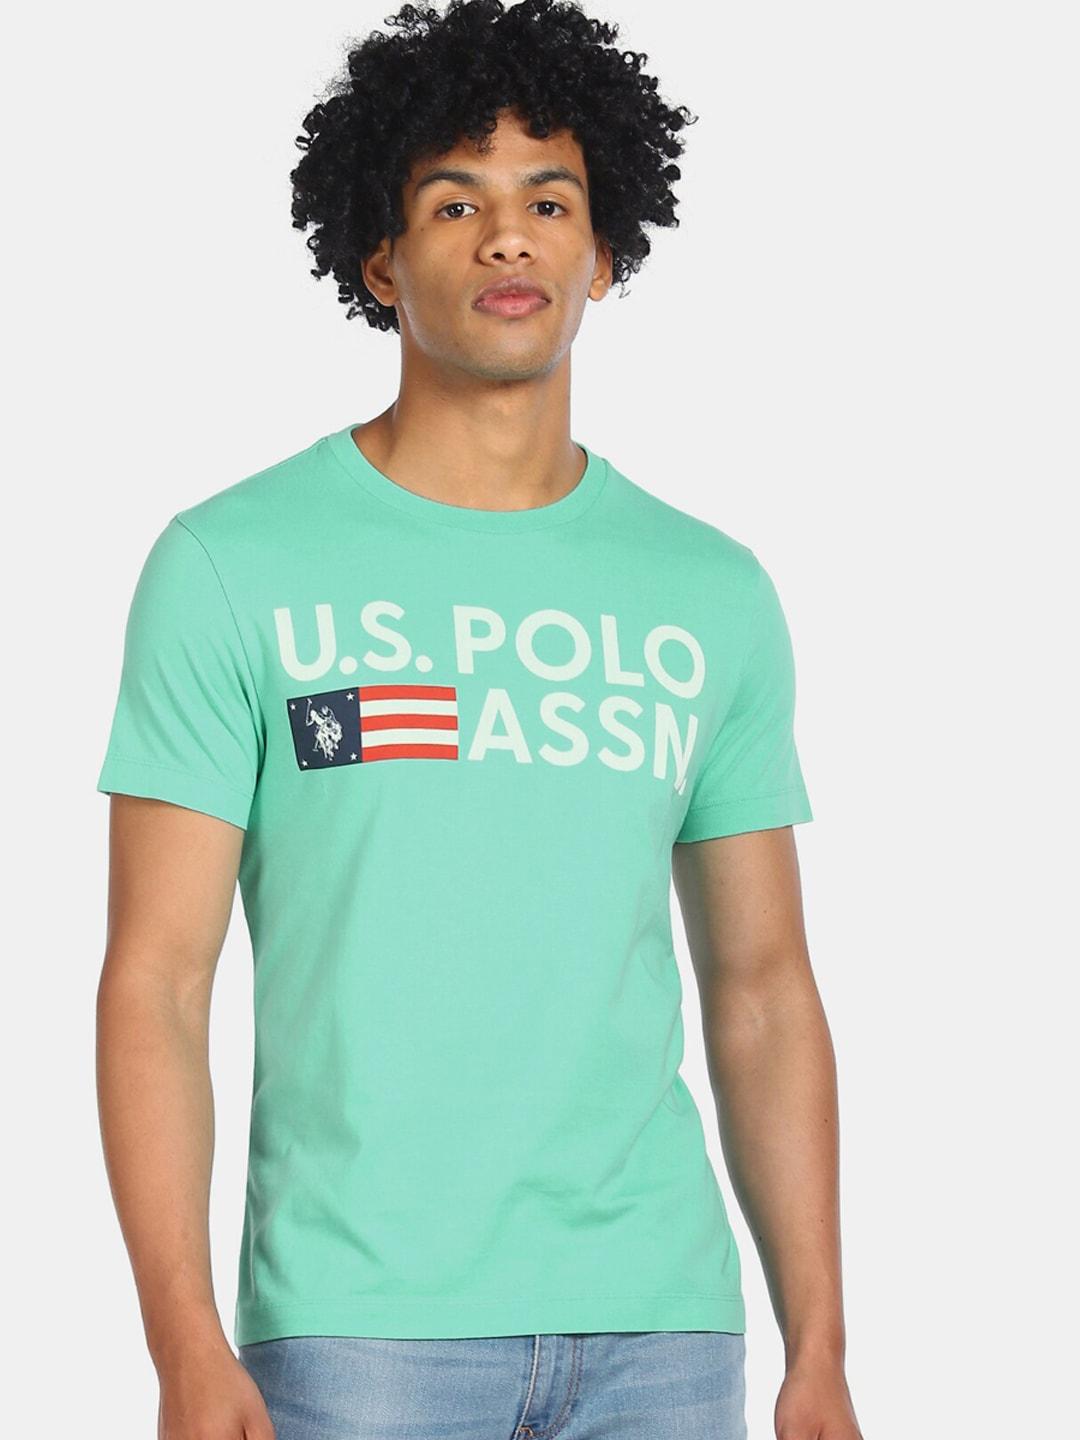 u.s. polo assn. denim co. men sea green printed round neck t-shirt